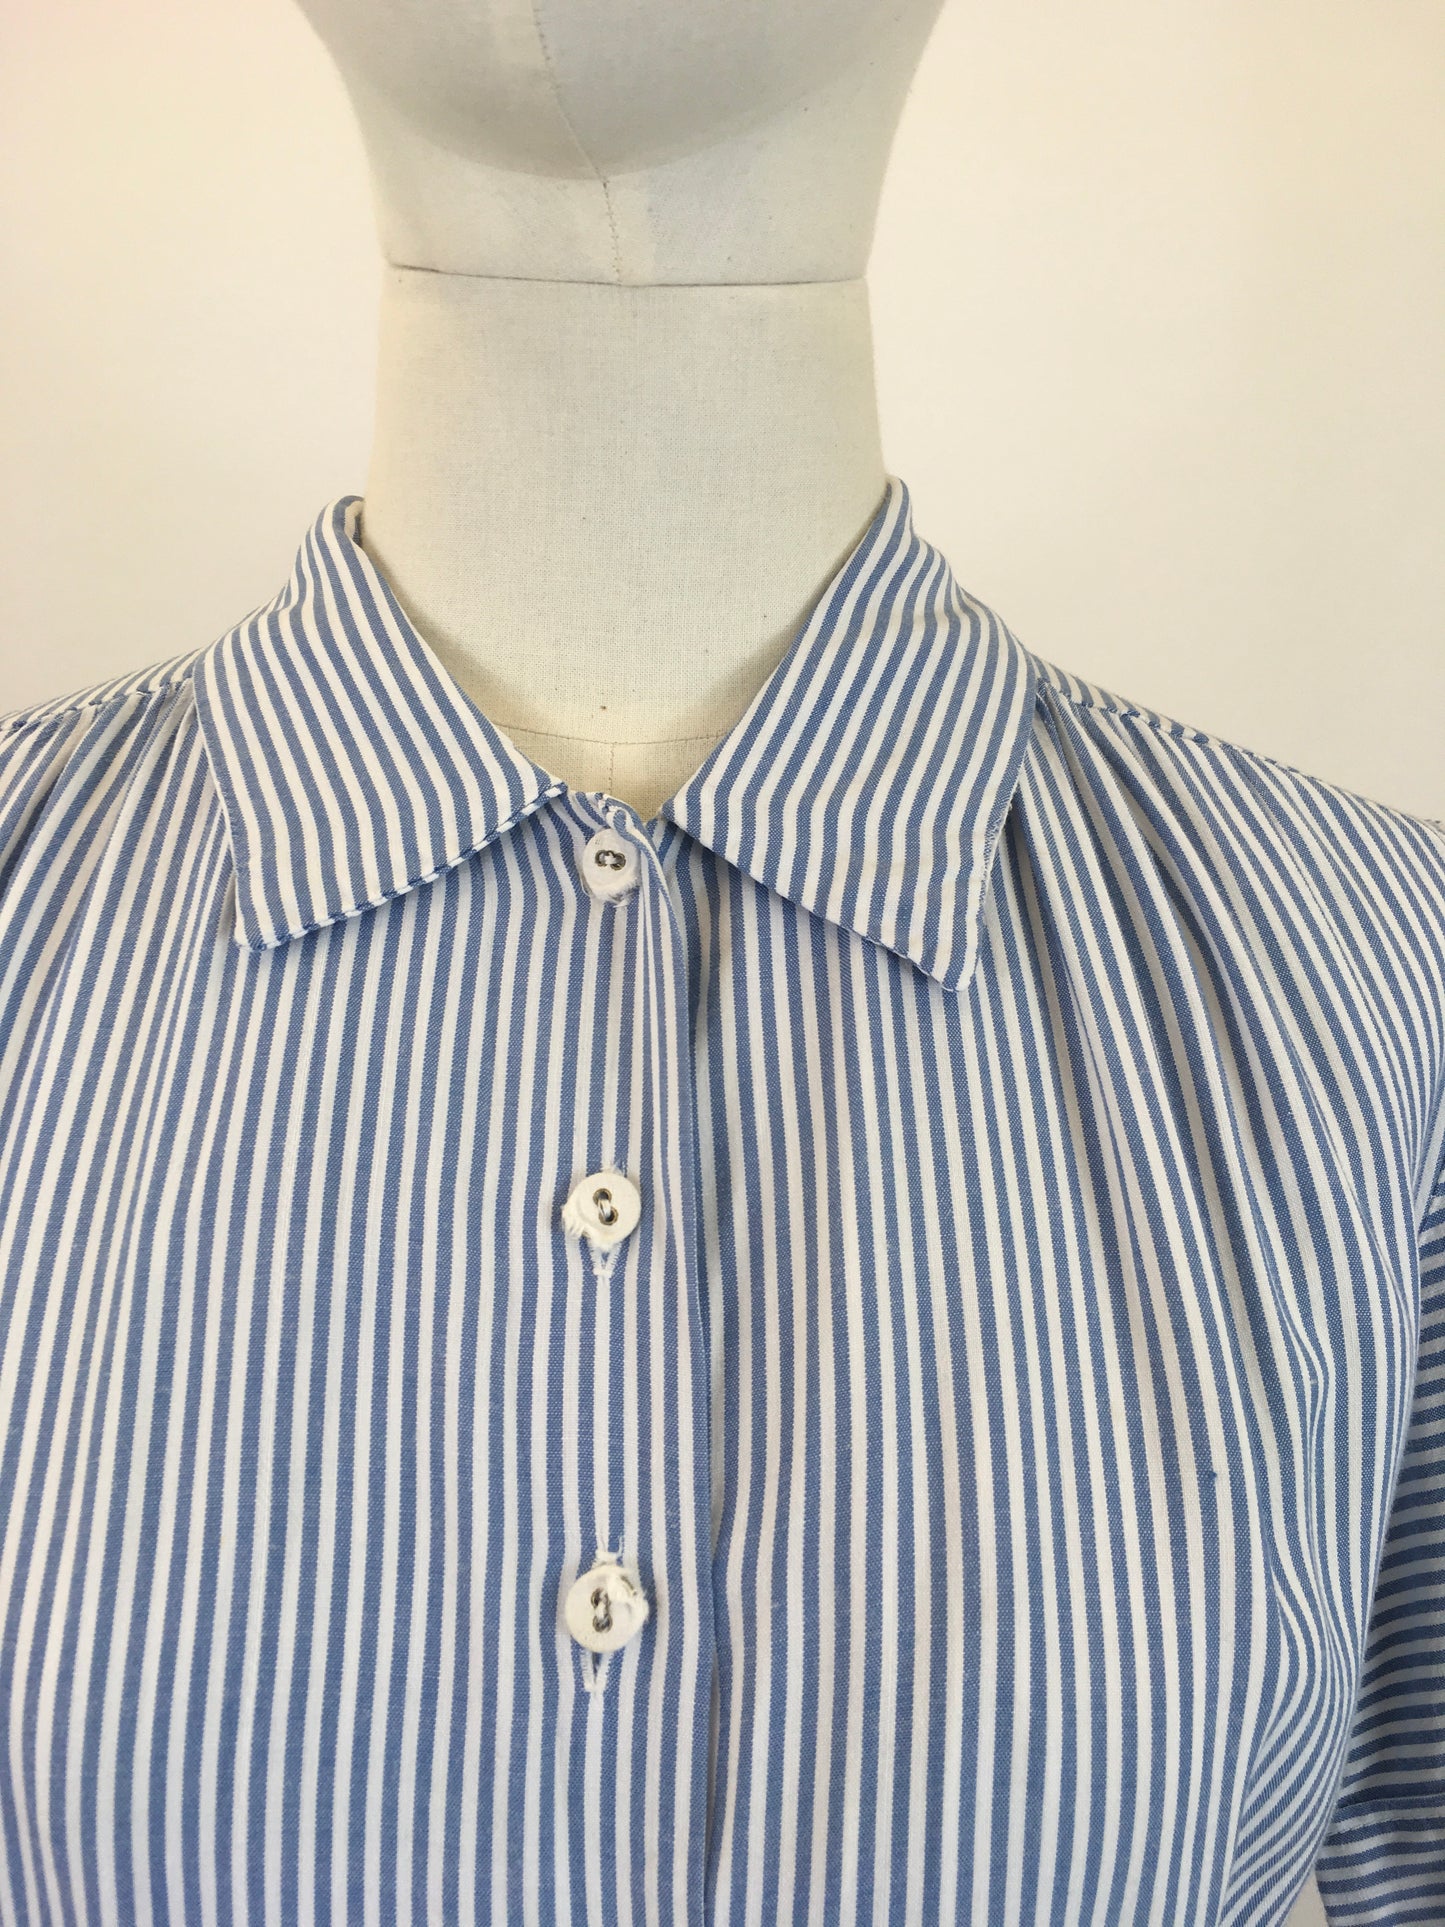 Original 1940’s Gorgeous Striped Blouse - in Blue/White